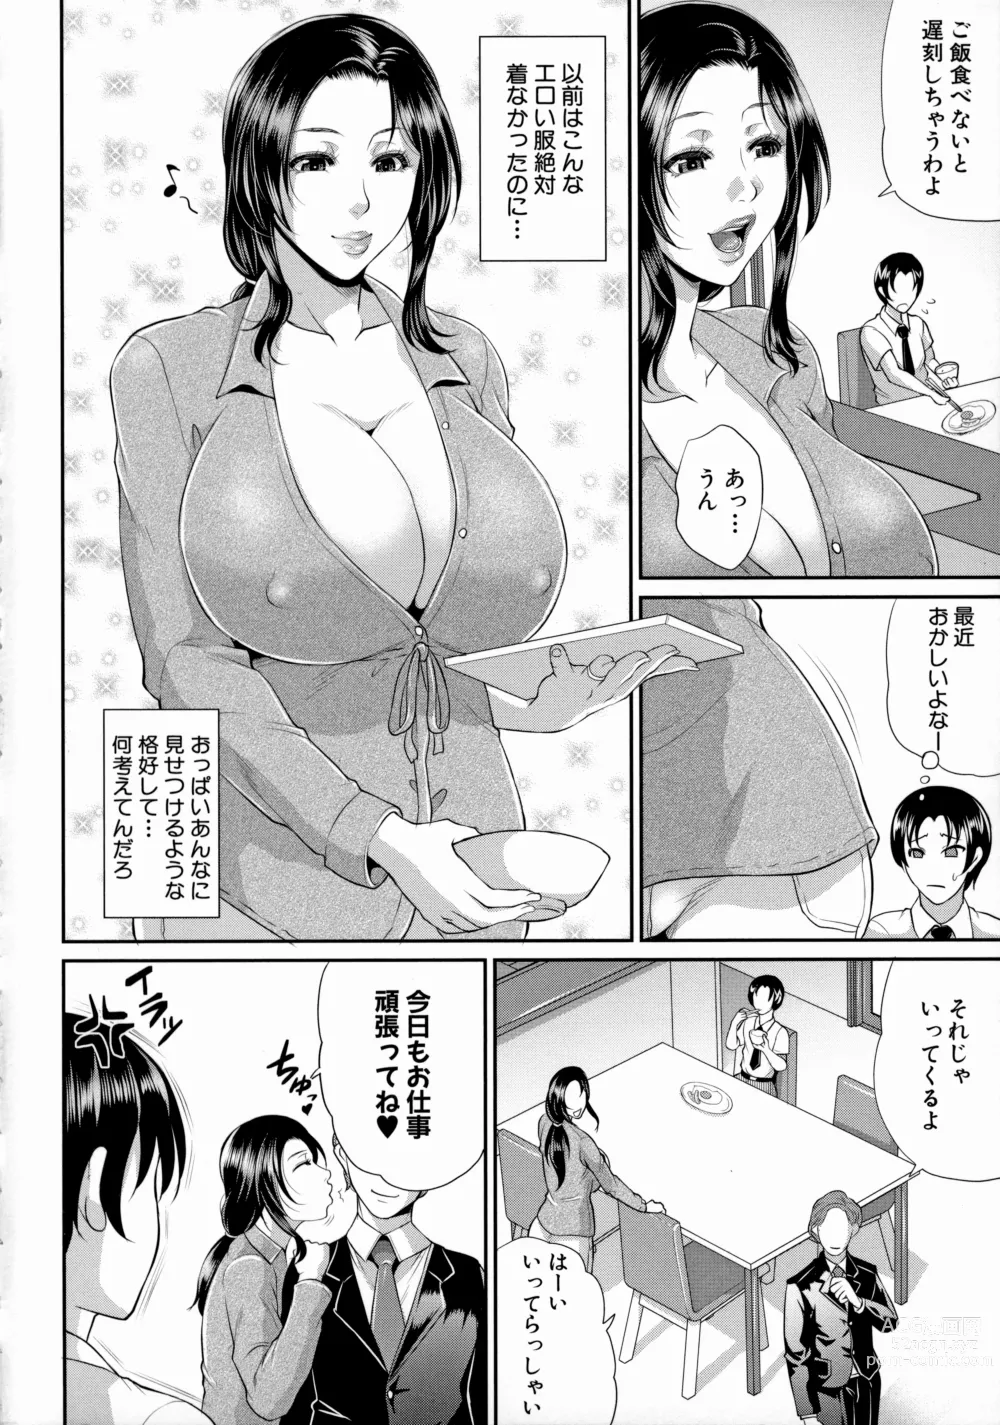 Page 4 of manga Uruwashi no Wife